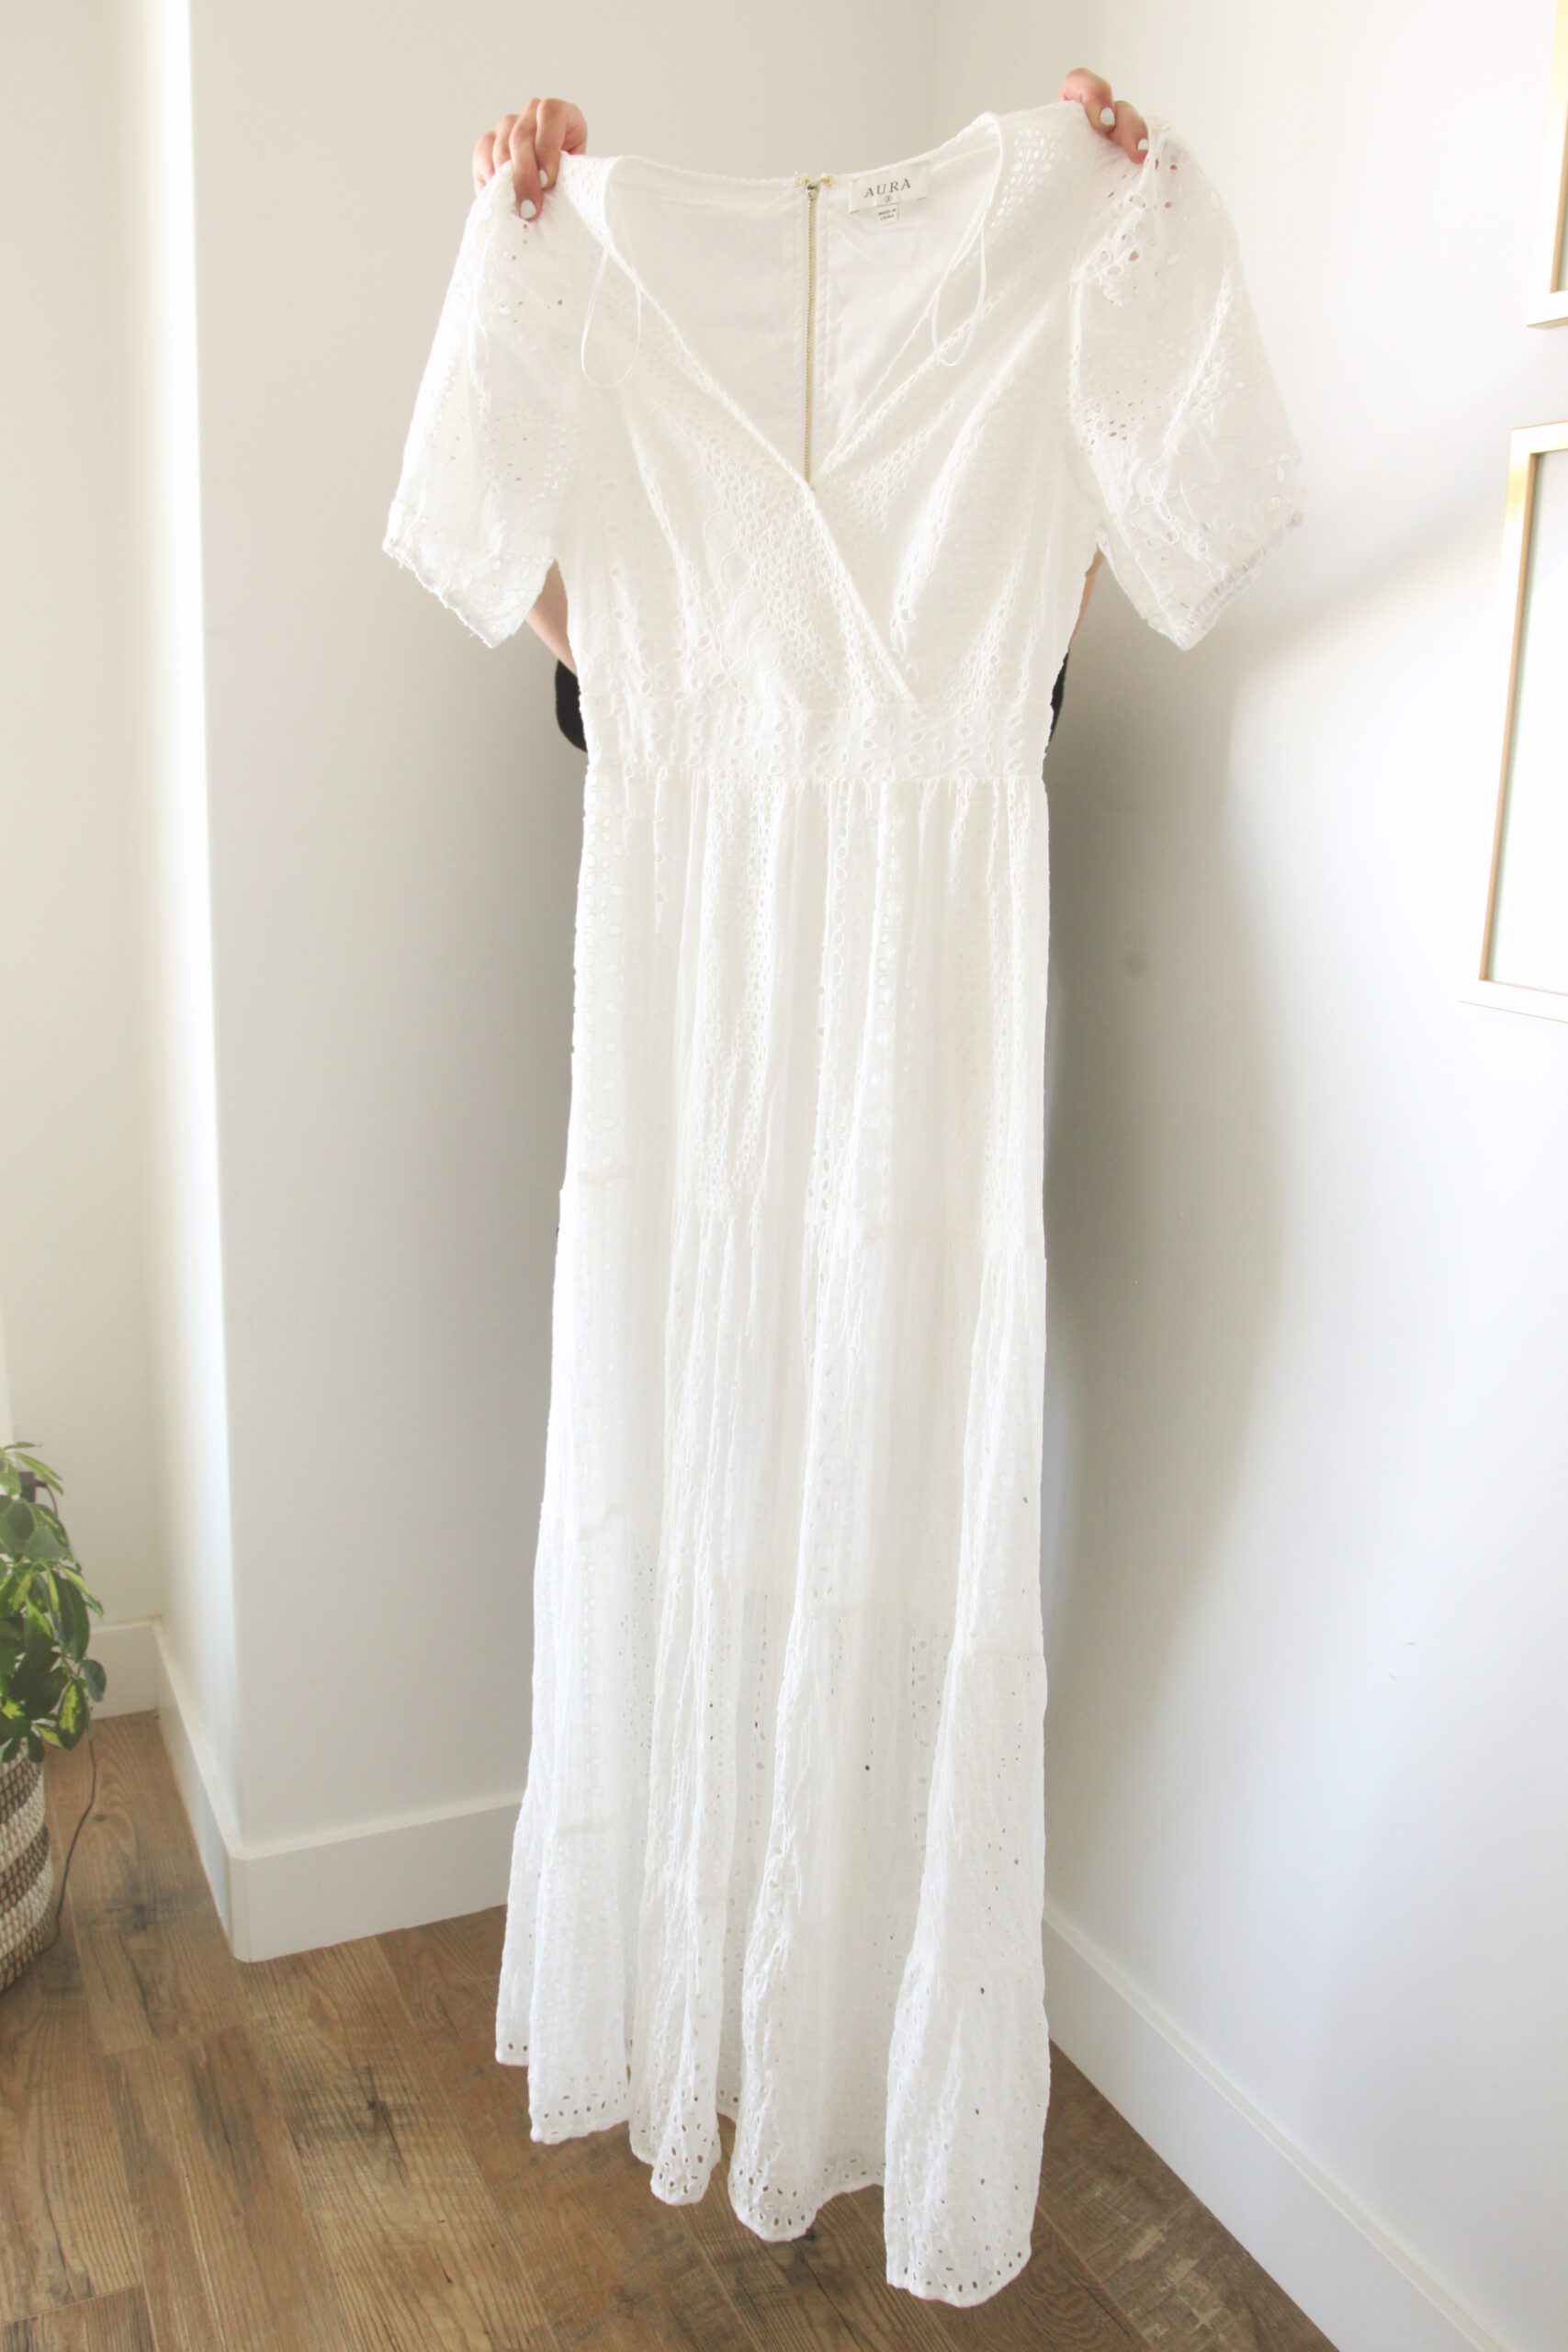 How-To-Dip-Dye-A-Wedding-Dress-White-Dress